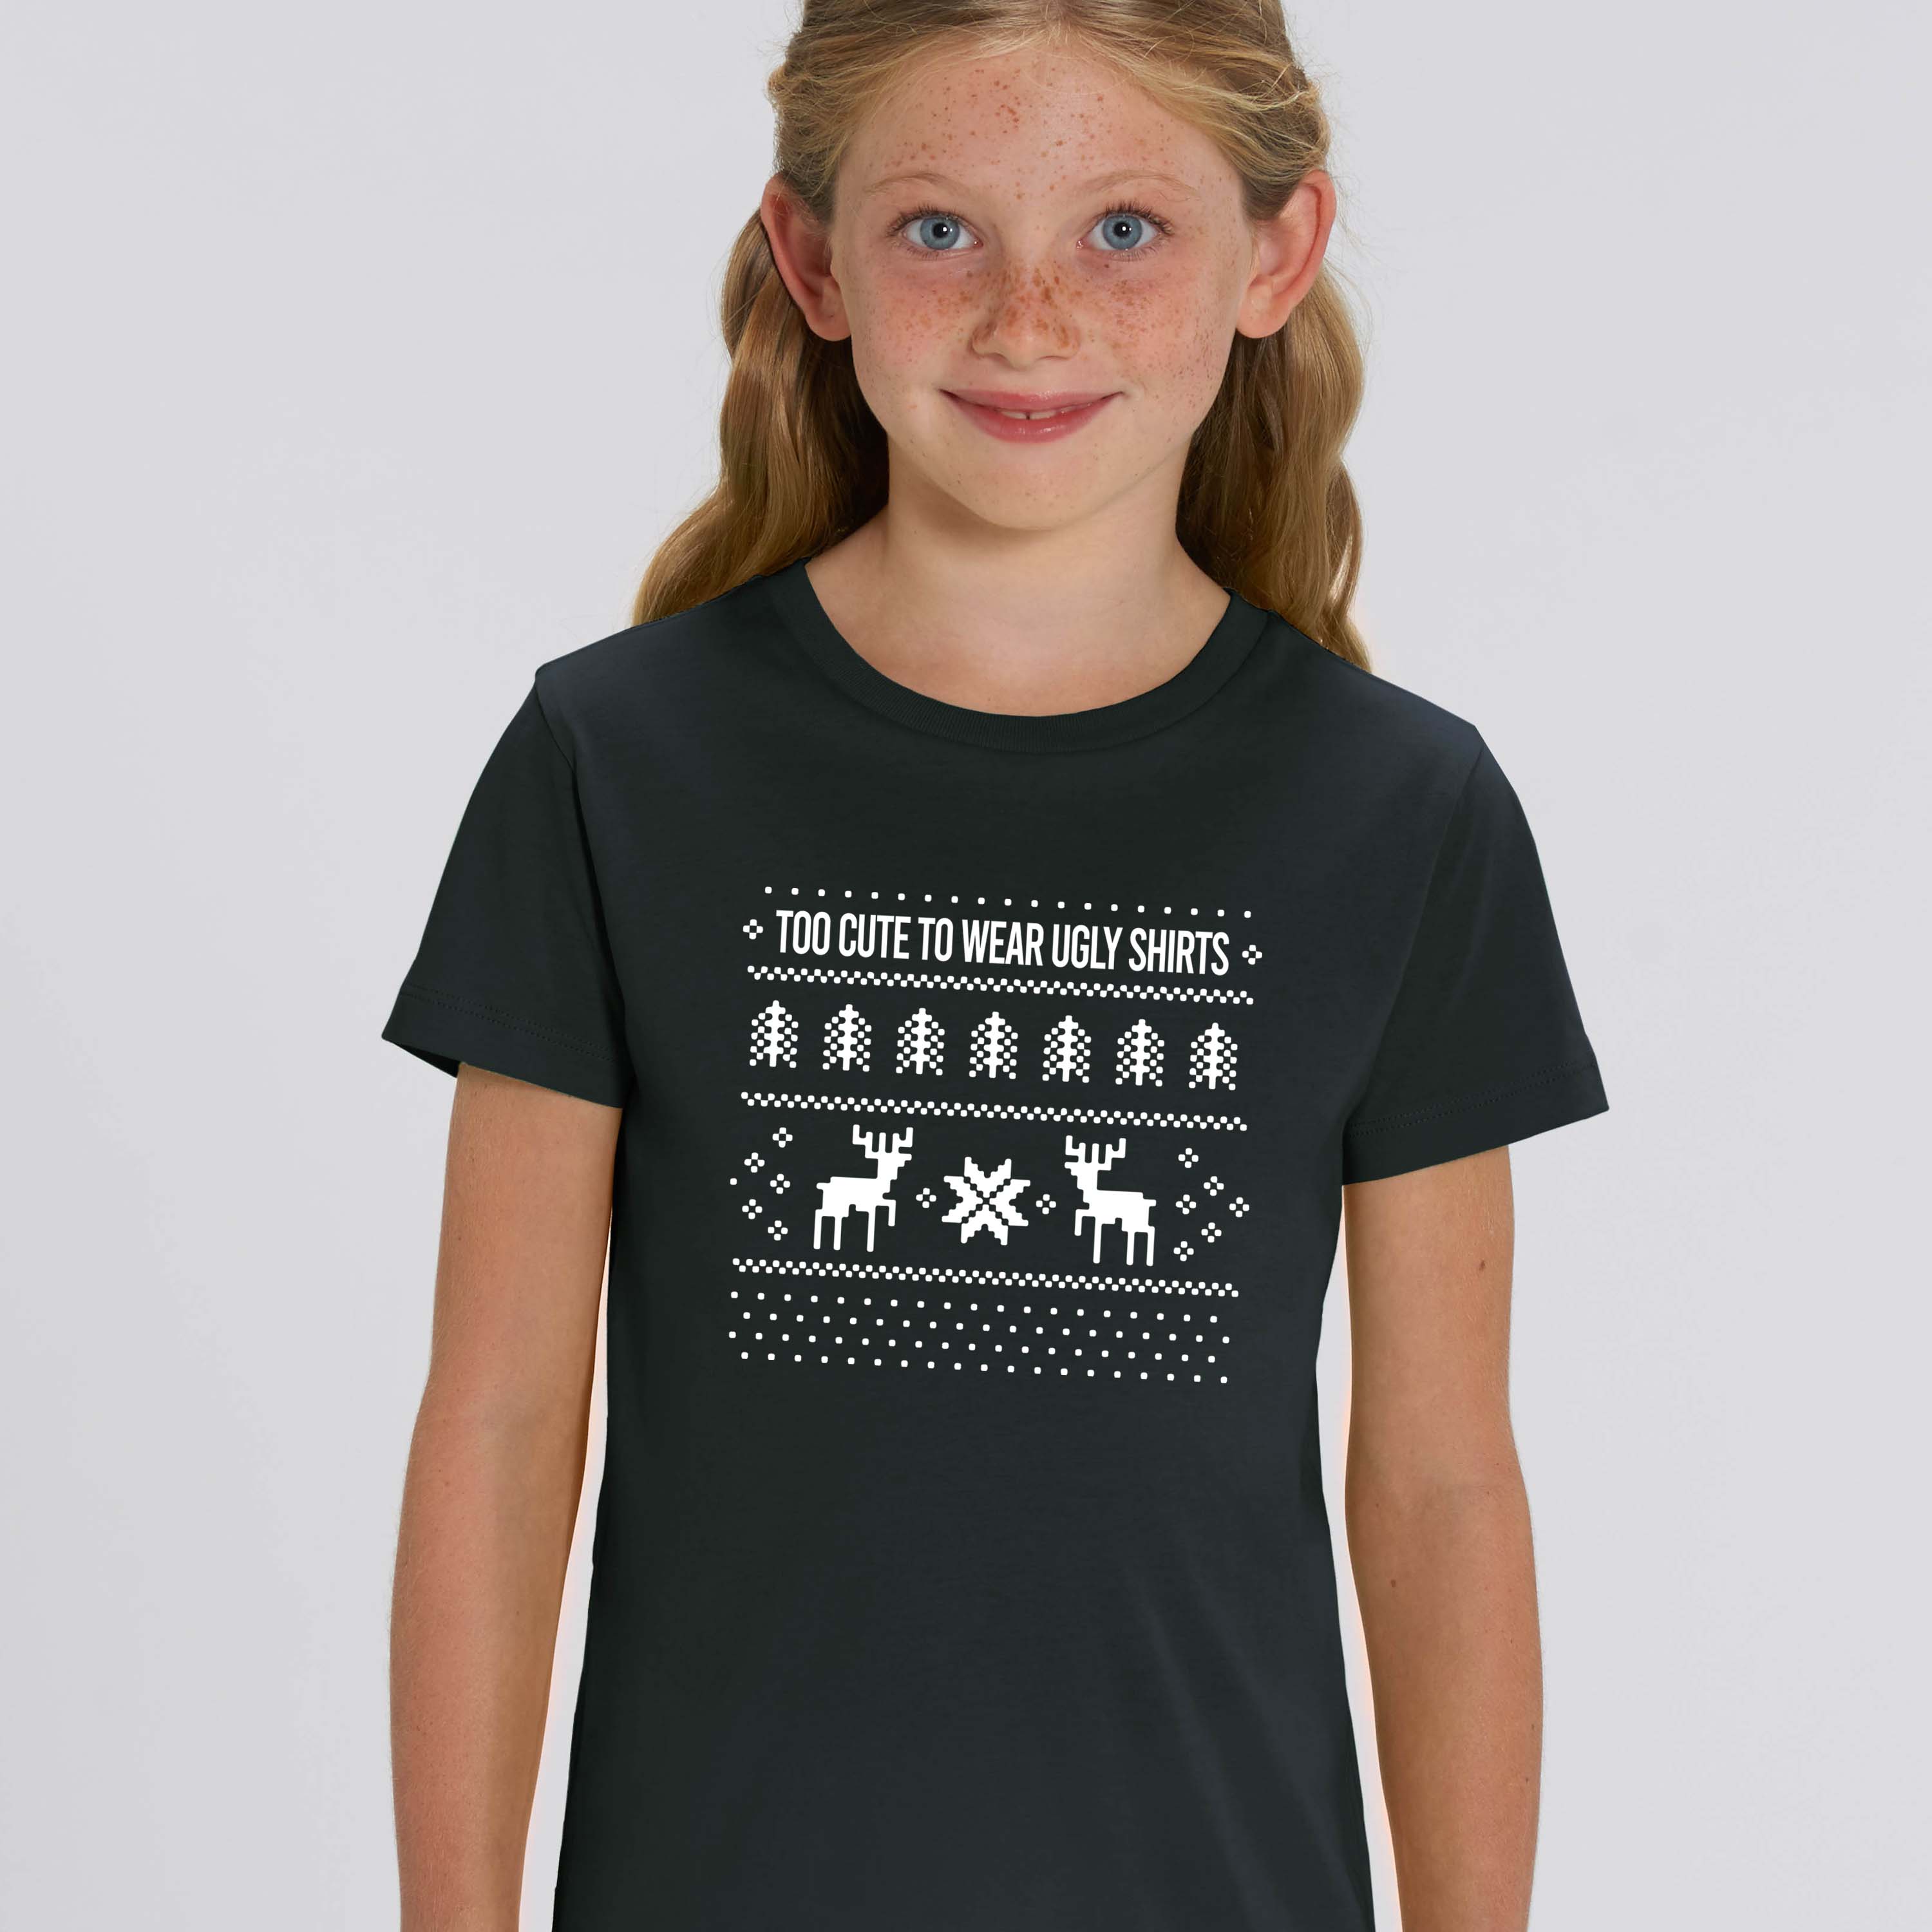 XMAS Kids T-Shirt - Too cute to wear ugly shirts